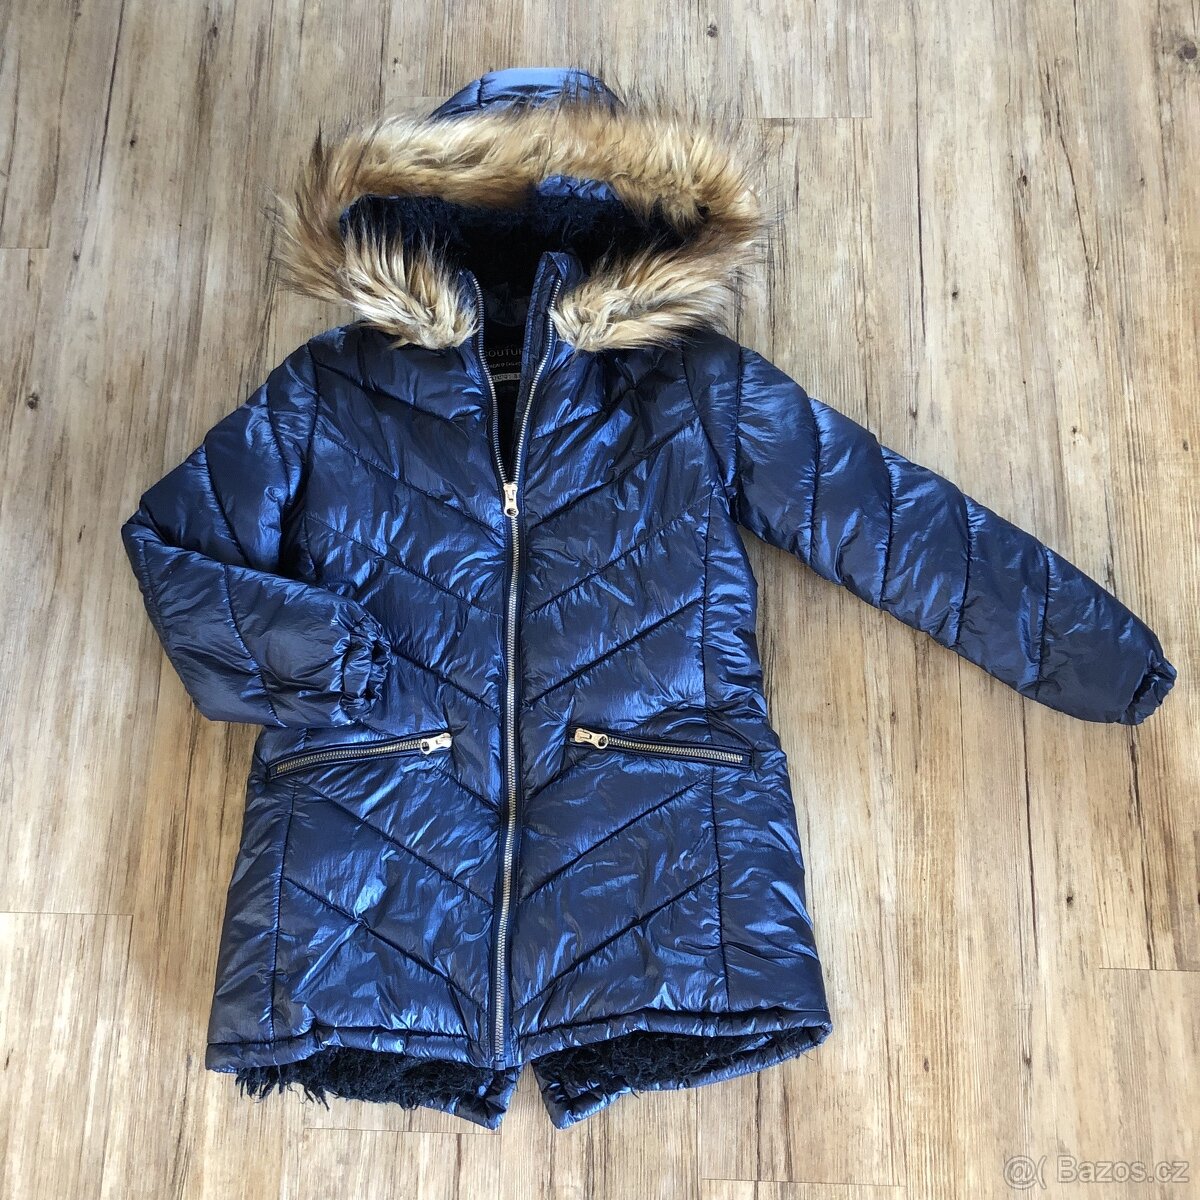 Zimní kabát Primigi - vel. 130